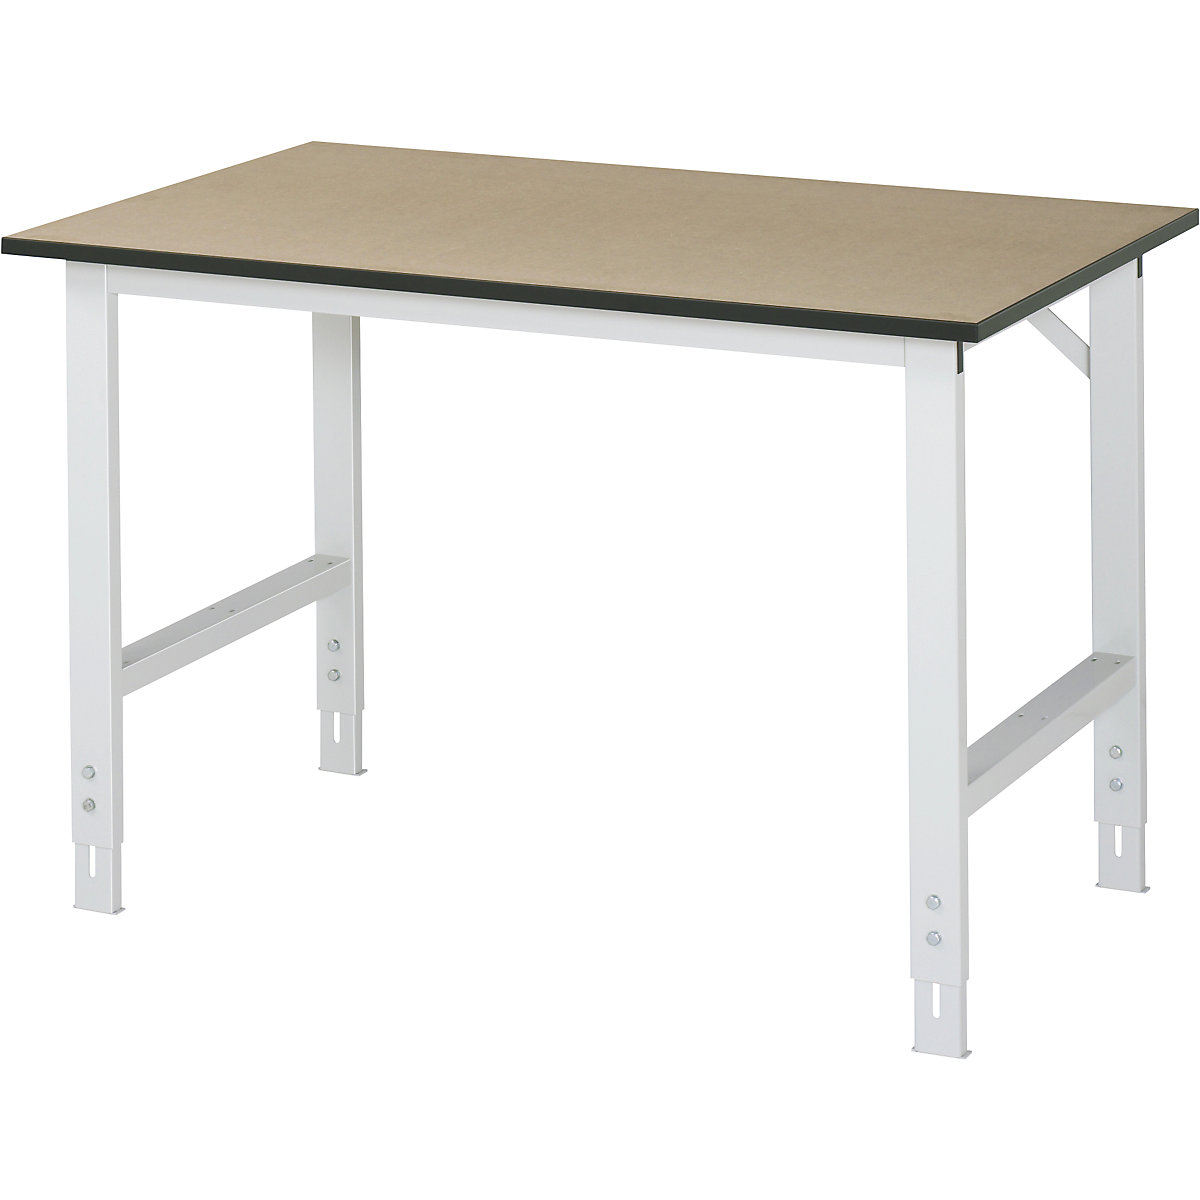 Delovna miza, nastavljiva po višini – RAU, 760 – 1080 mm, MDF plošča, ŠxG 1250 x 800 mm, svetlo siva-8